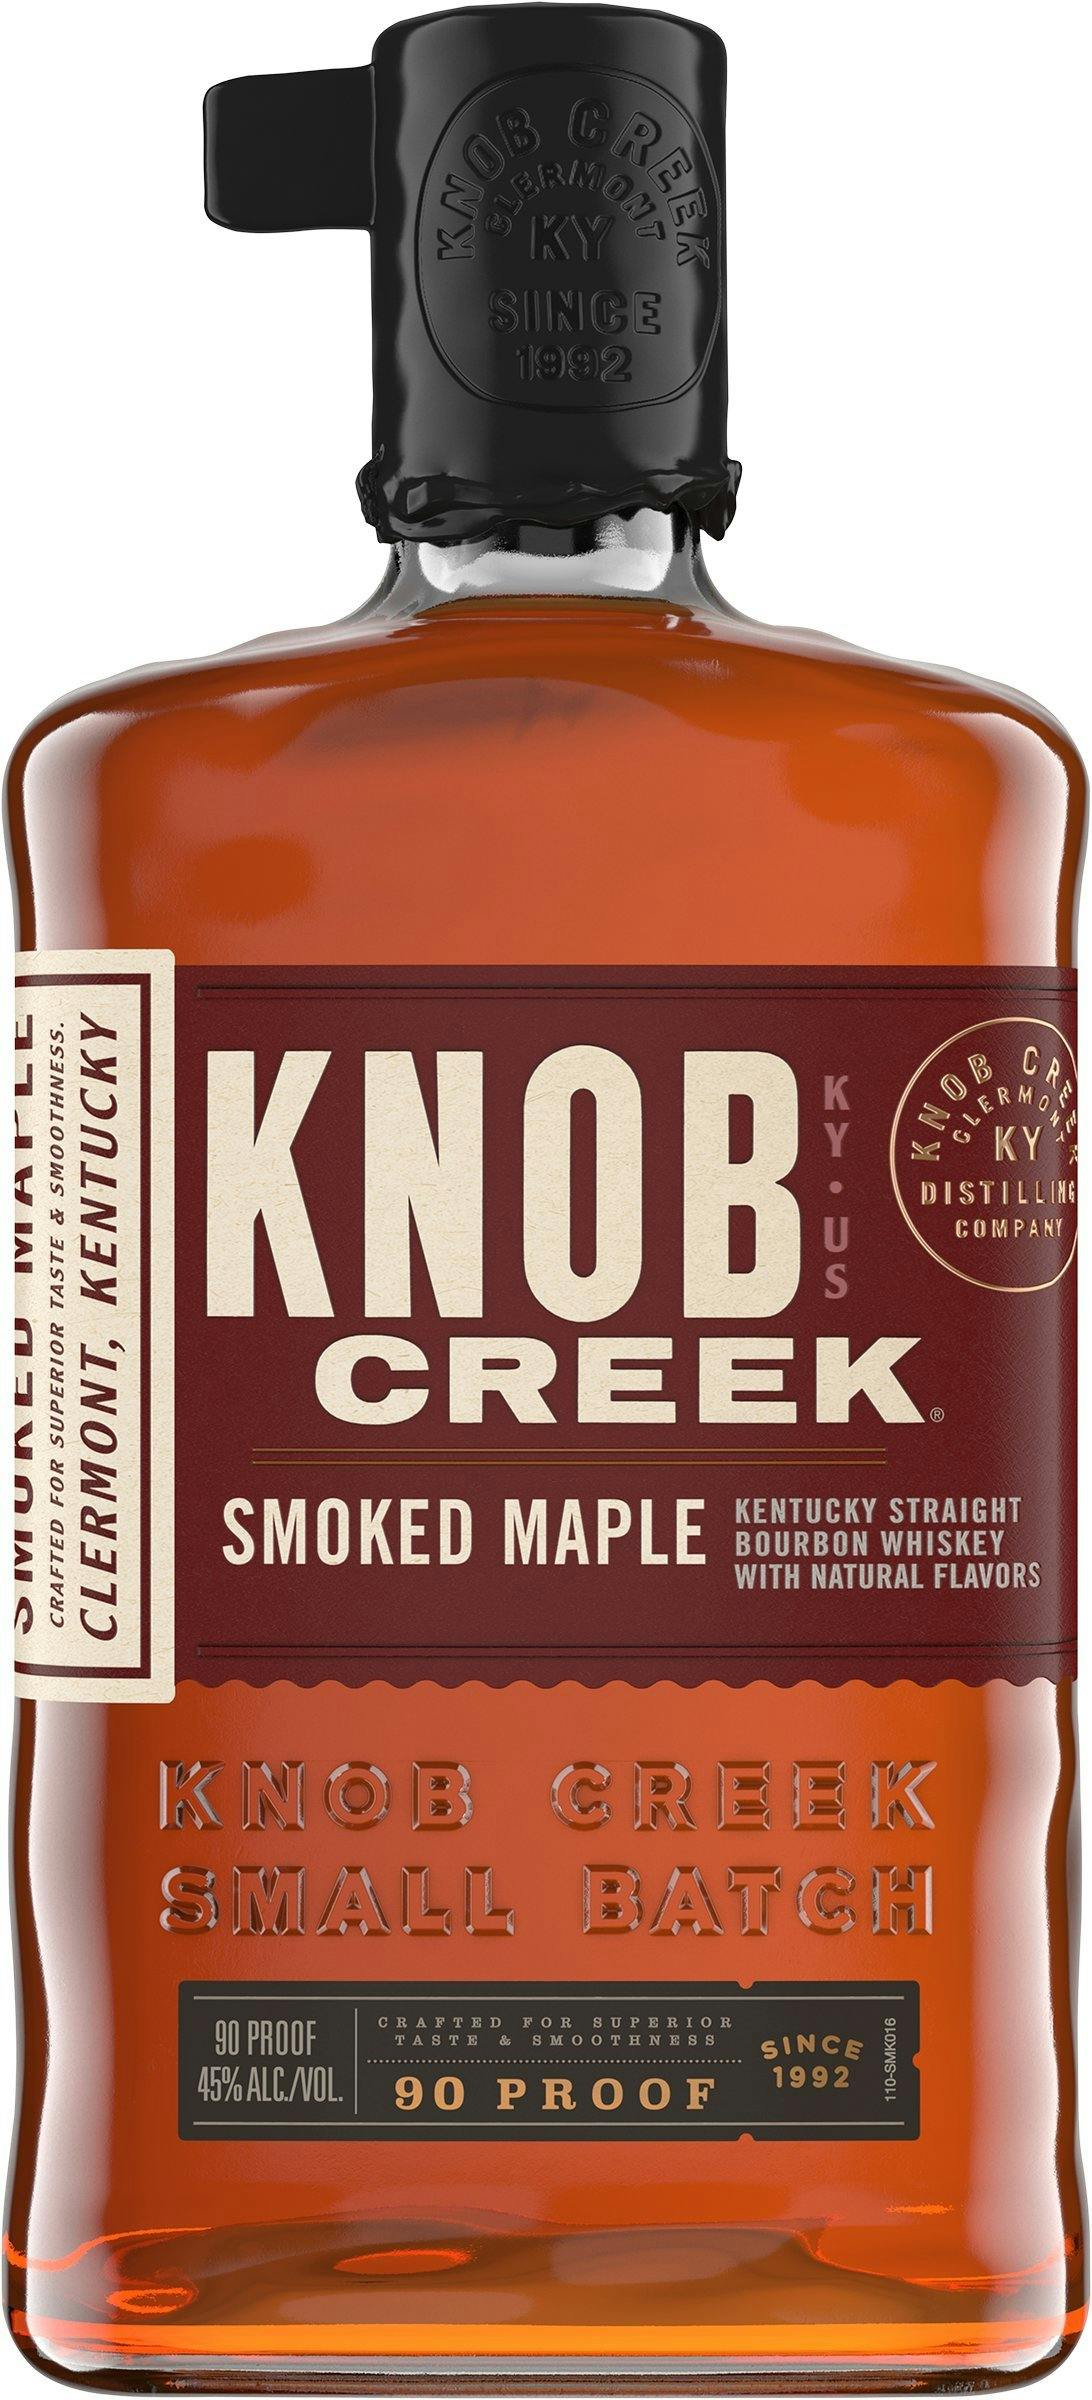 Company Distilling Maple Wood Finished Bourbon Whiskey - 750 ml